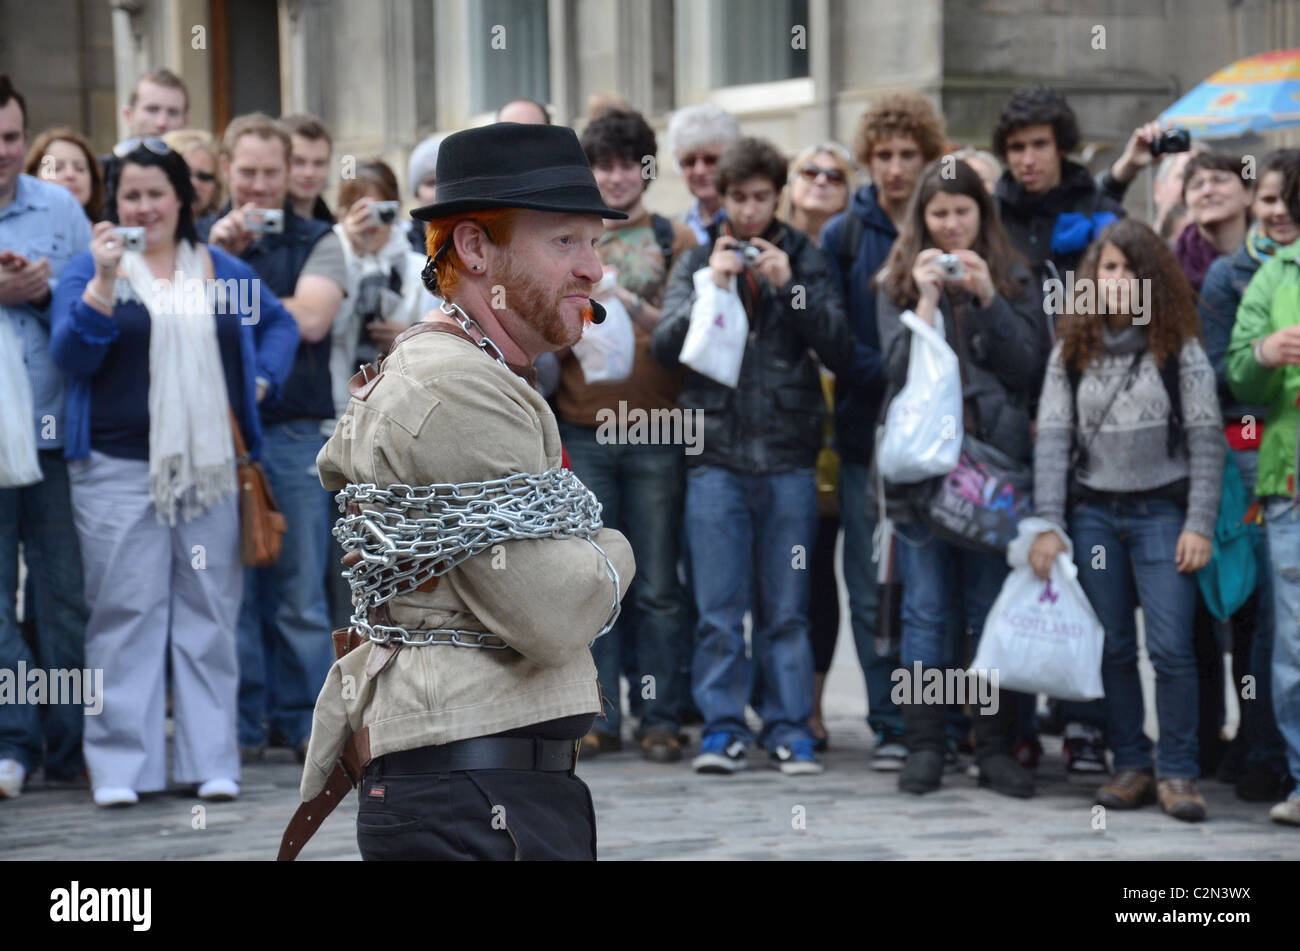 A street performer entertains the crowd on the Edinburgh's Royal Mile. Stock Photo